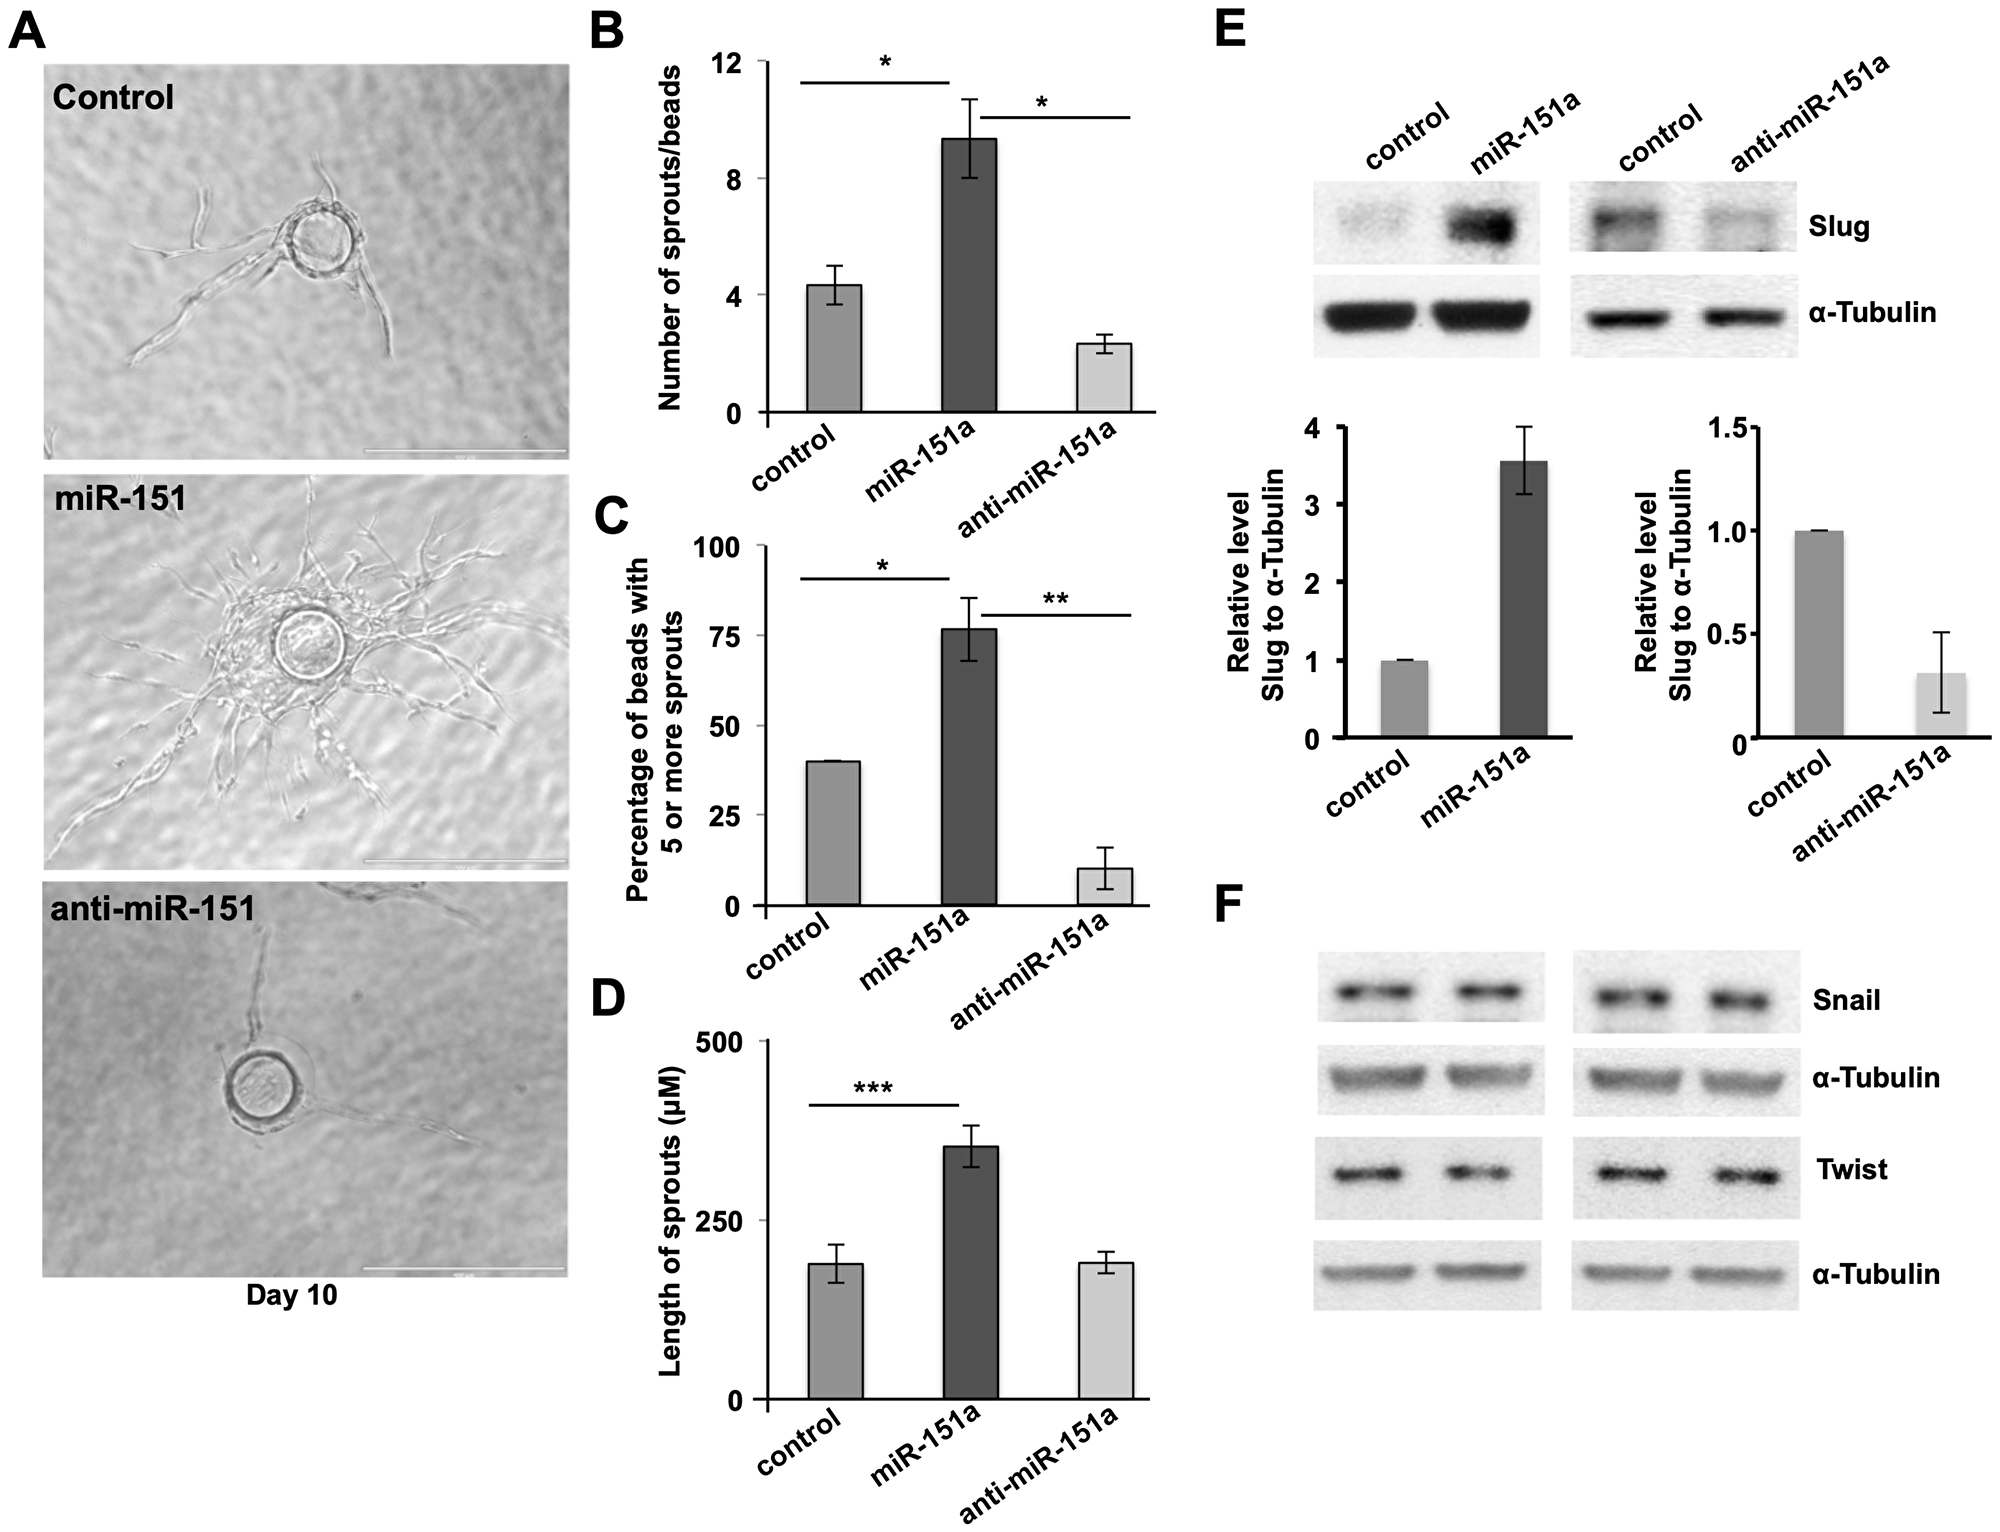 miR-151a enhances EC angiogenesis and induces the amount of Slug protein.